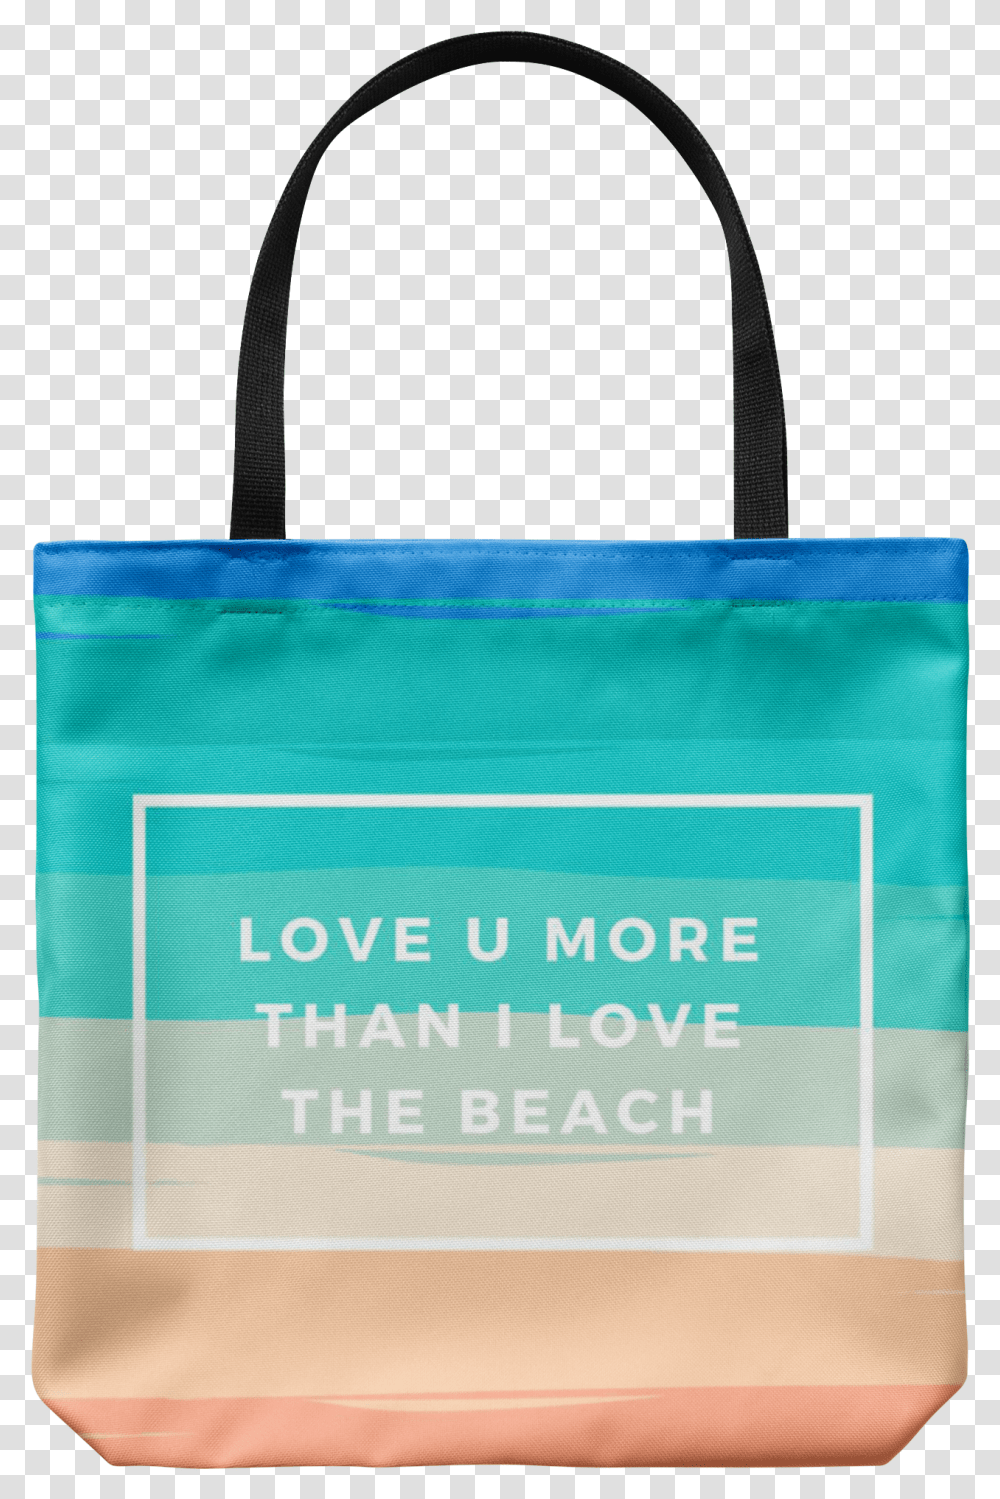 Love You More Than I Love The Beach Tote Bag, Shopping Bag, Box, Handbag, Accessories Transparent Png